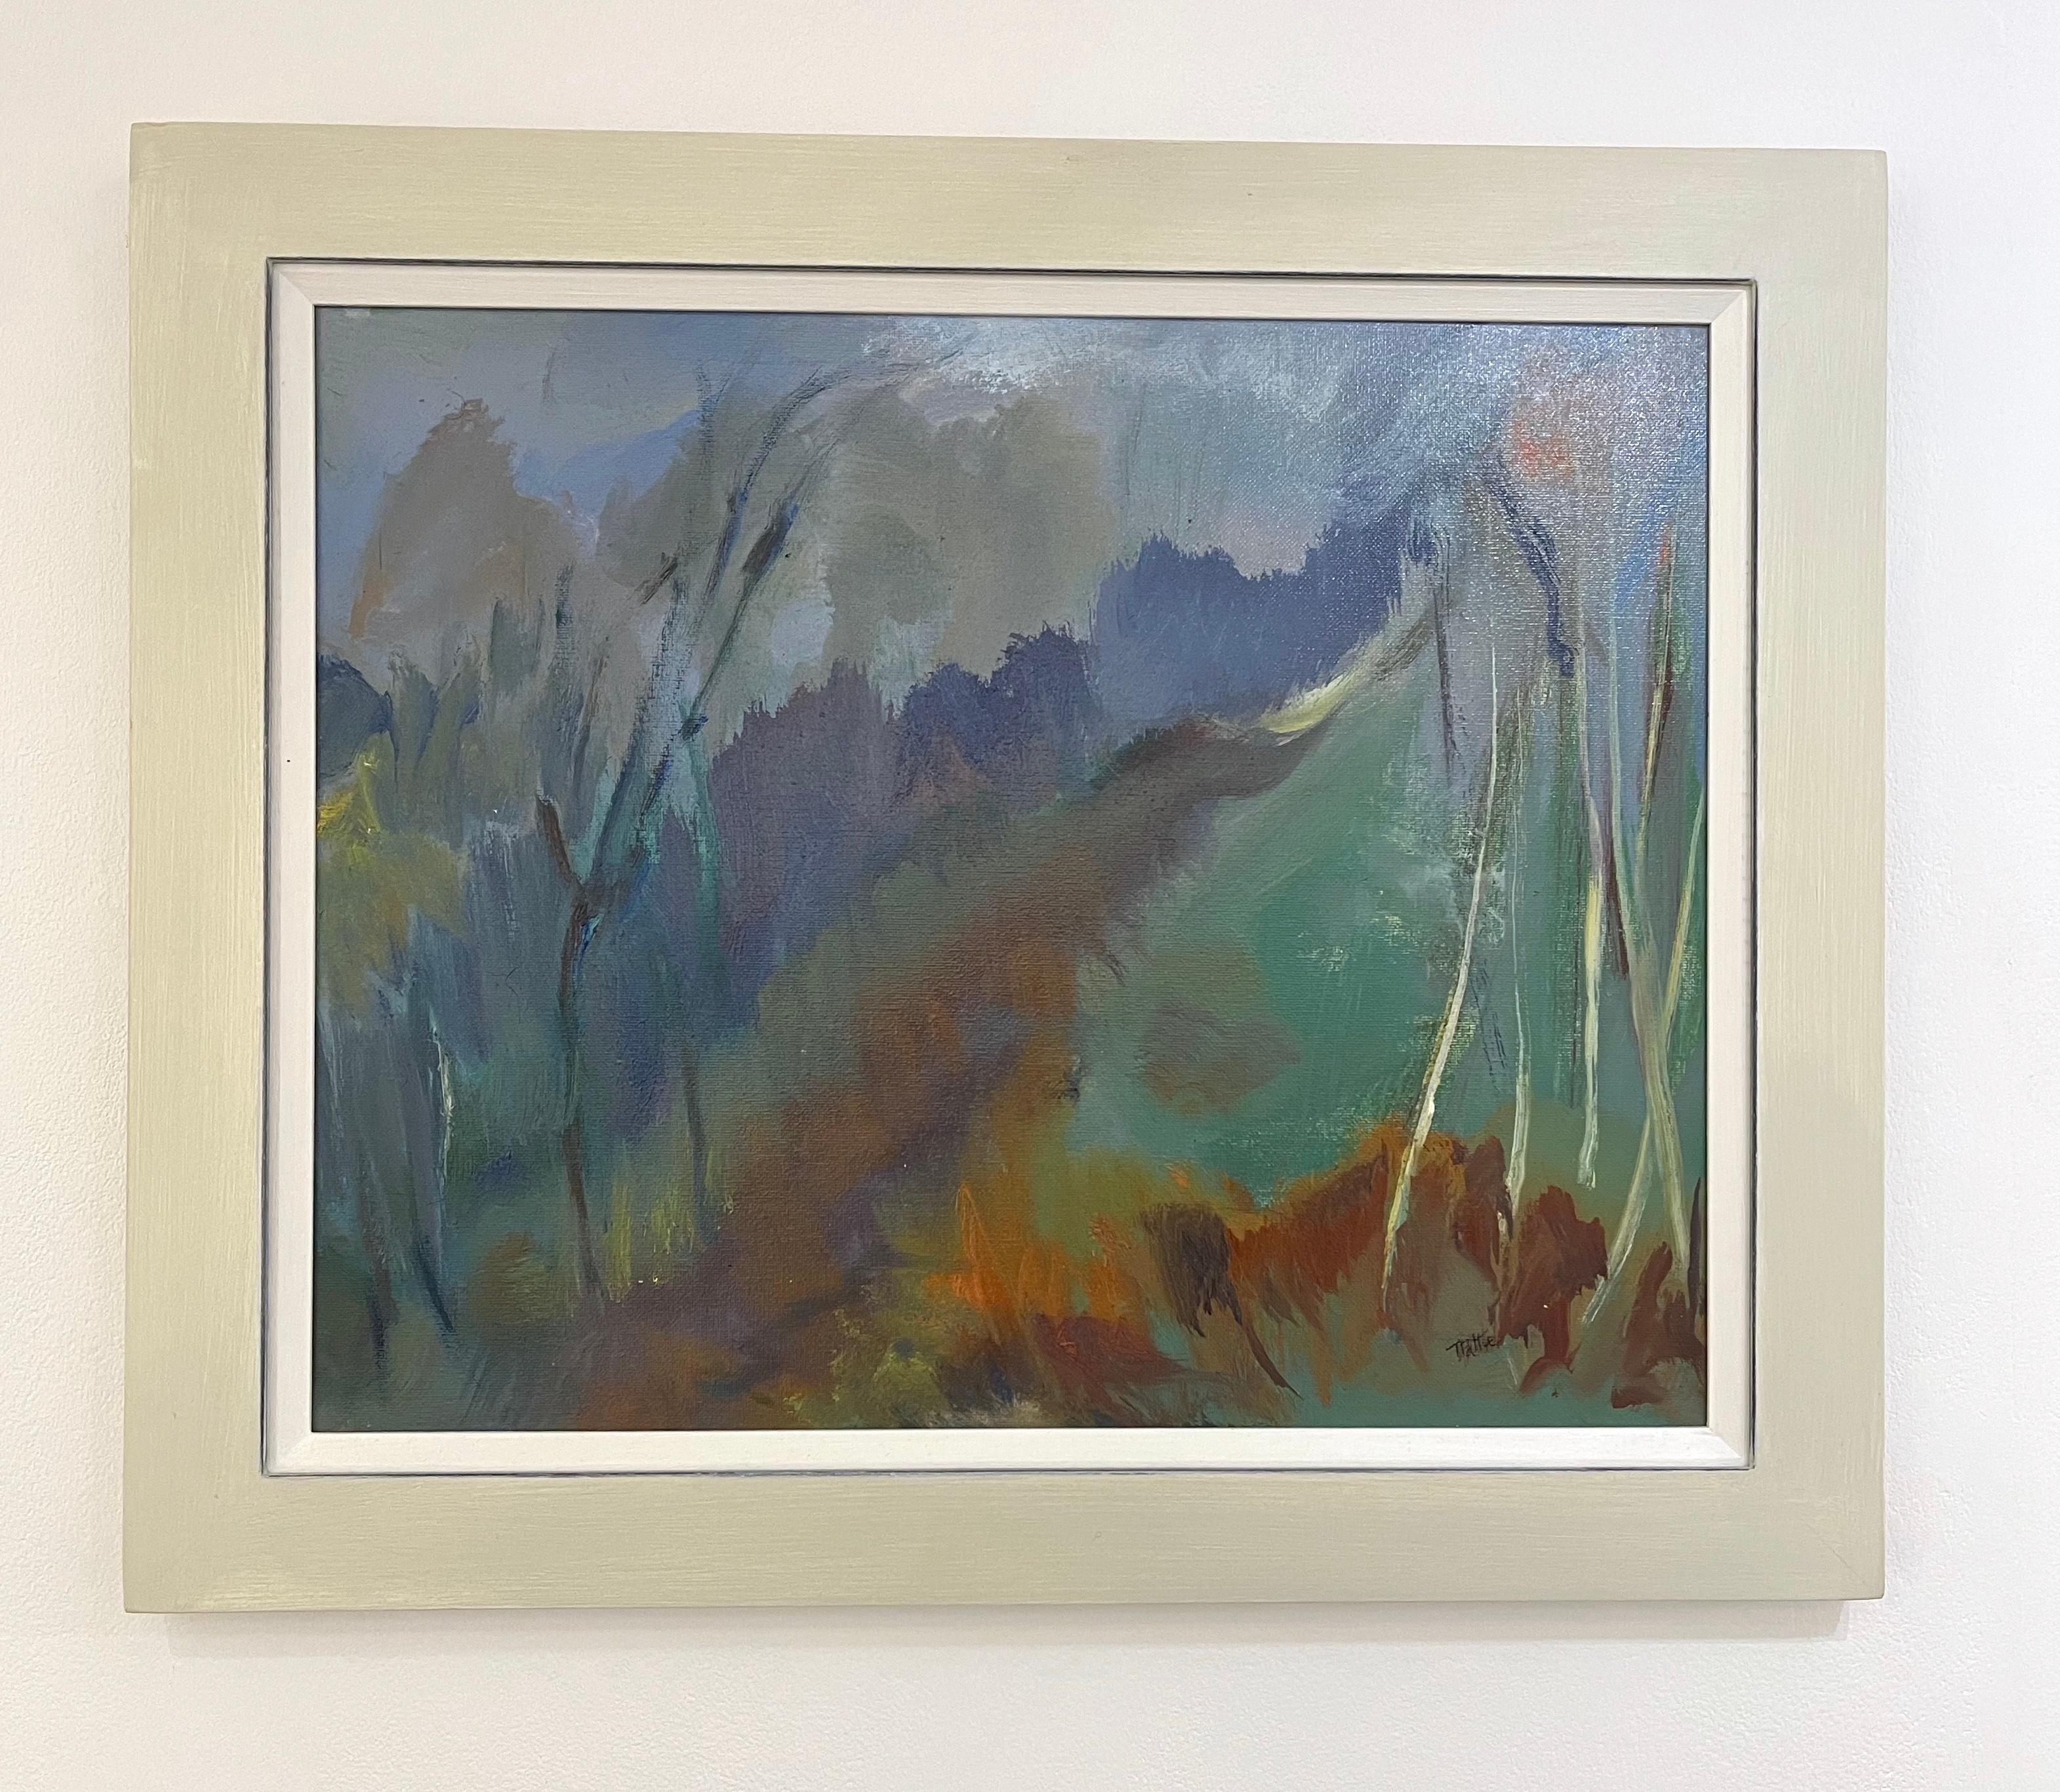 Tuëma Pattie. 'A Soft Day'  Oil on canvas. 39.5 x 49.5 cm (image) 51 x 61.5 cm (frame). 2020